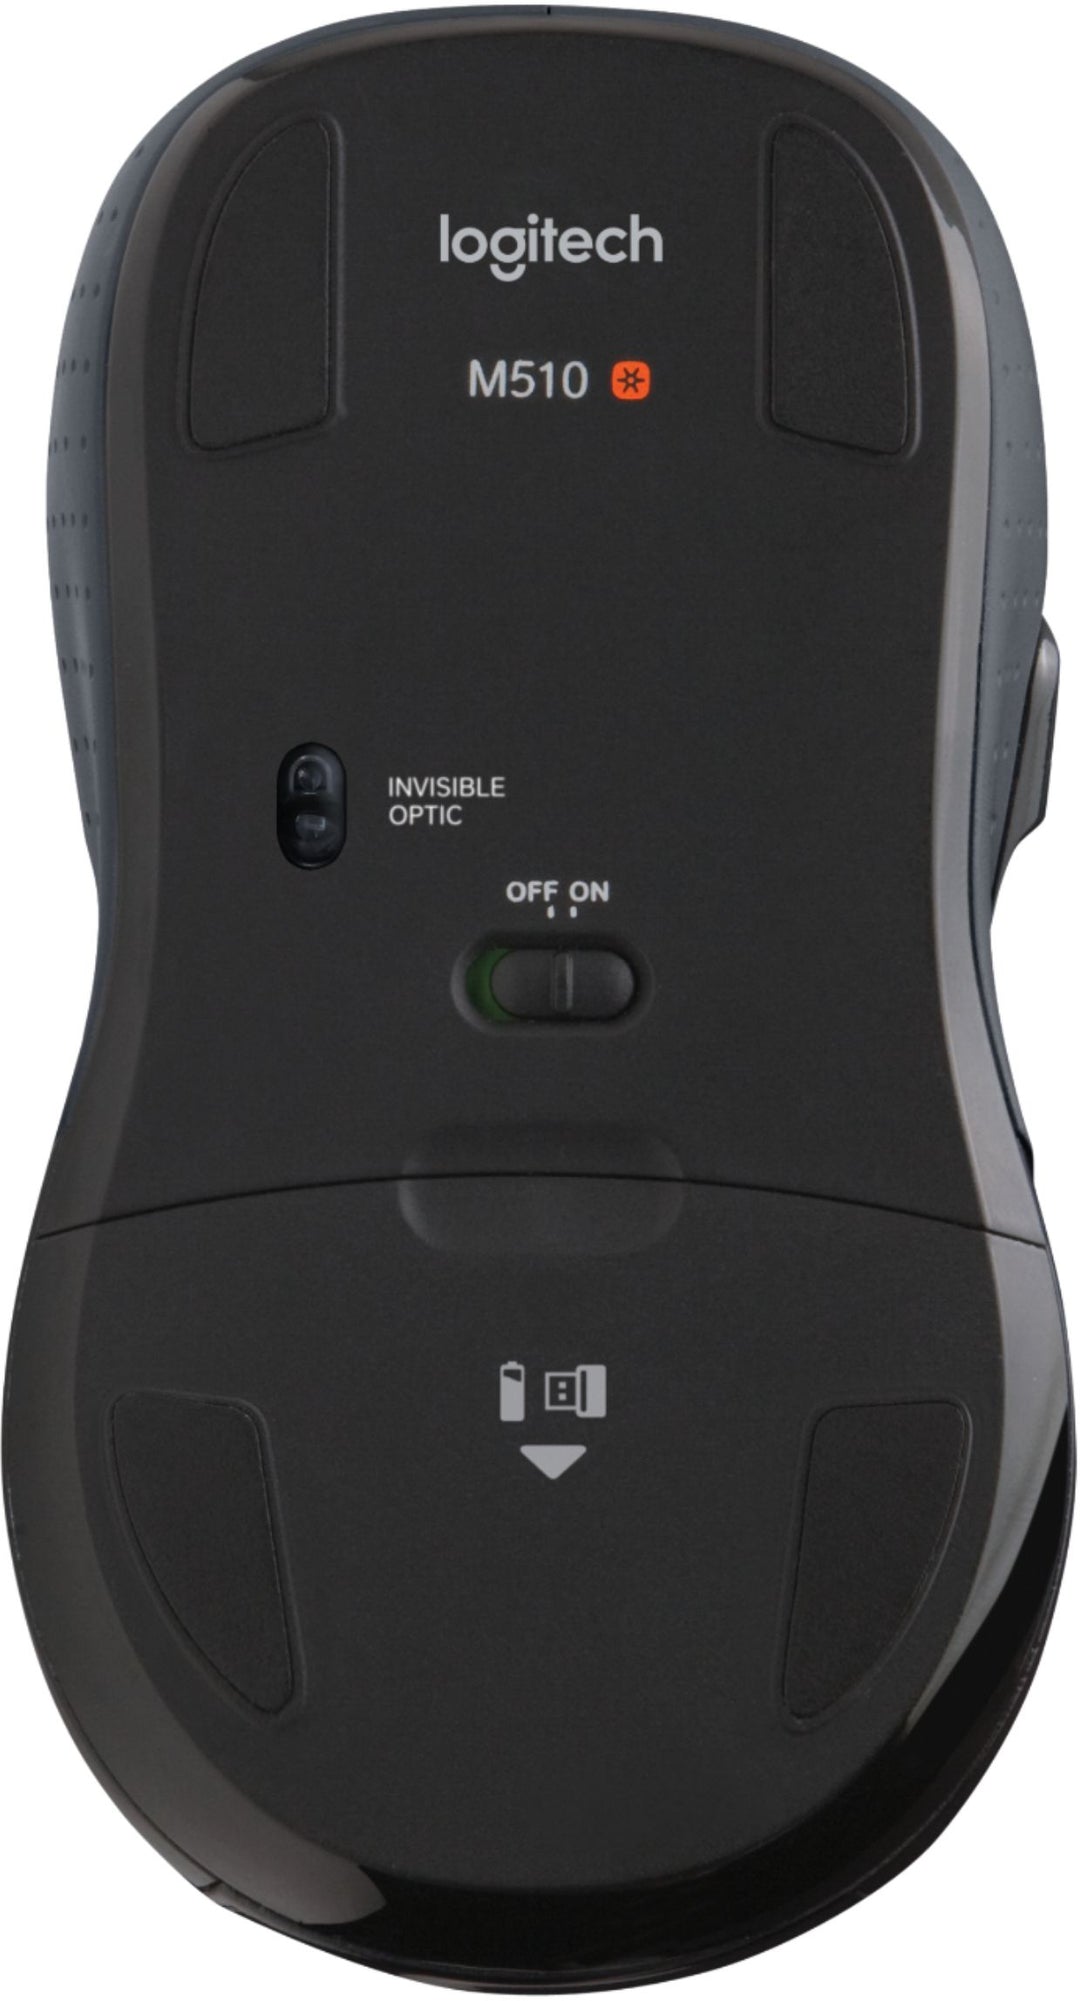 Logitech - M510 Wireless Optical Ambidextrous Mouse - Silver/Black_1